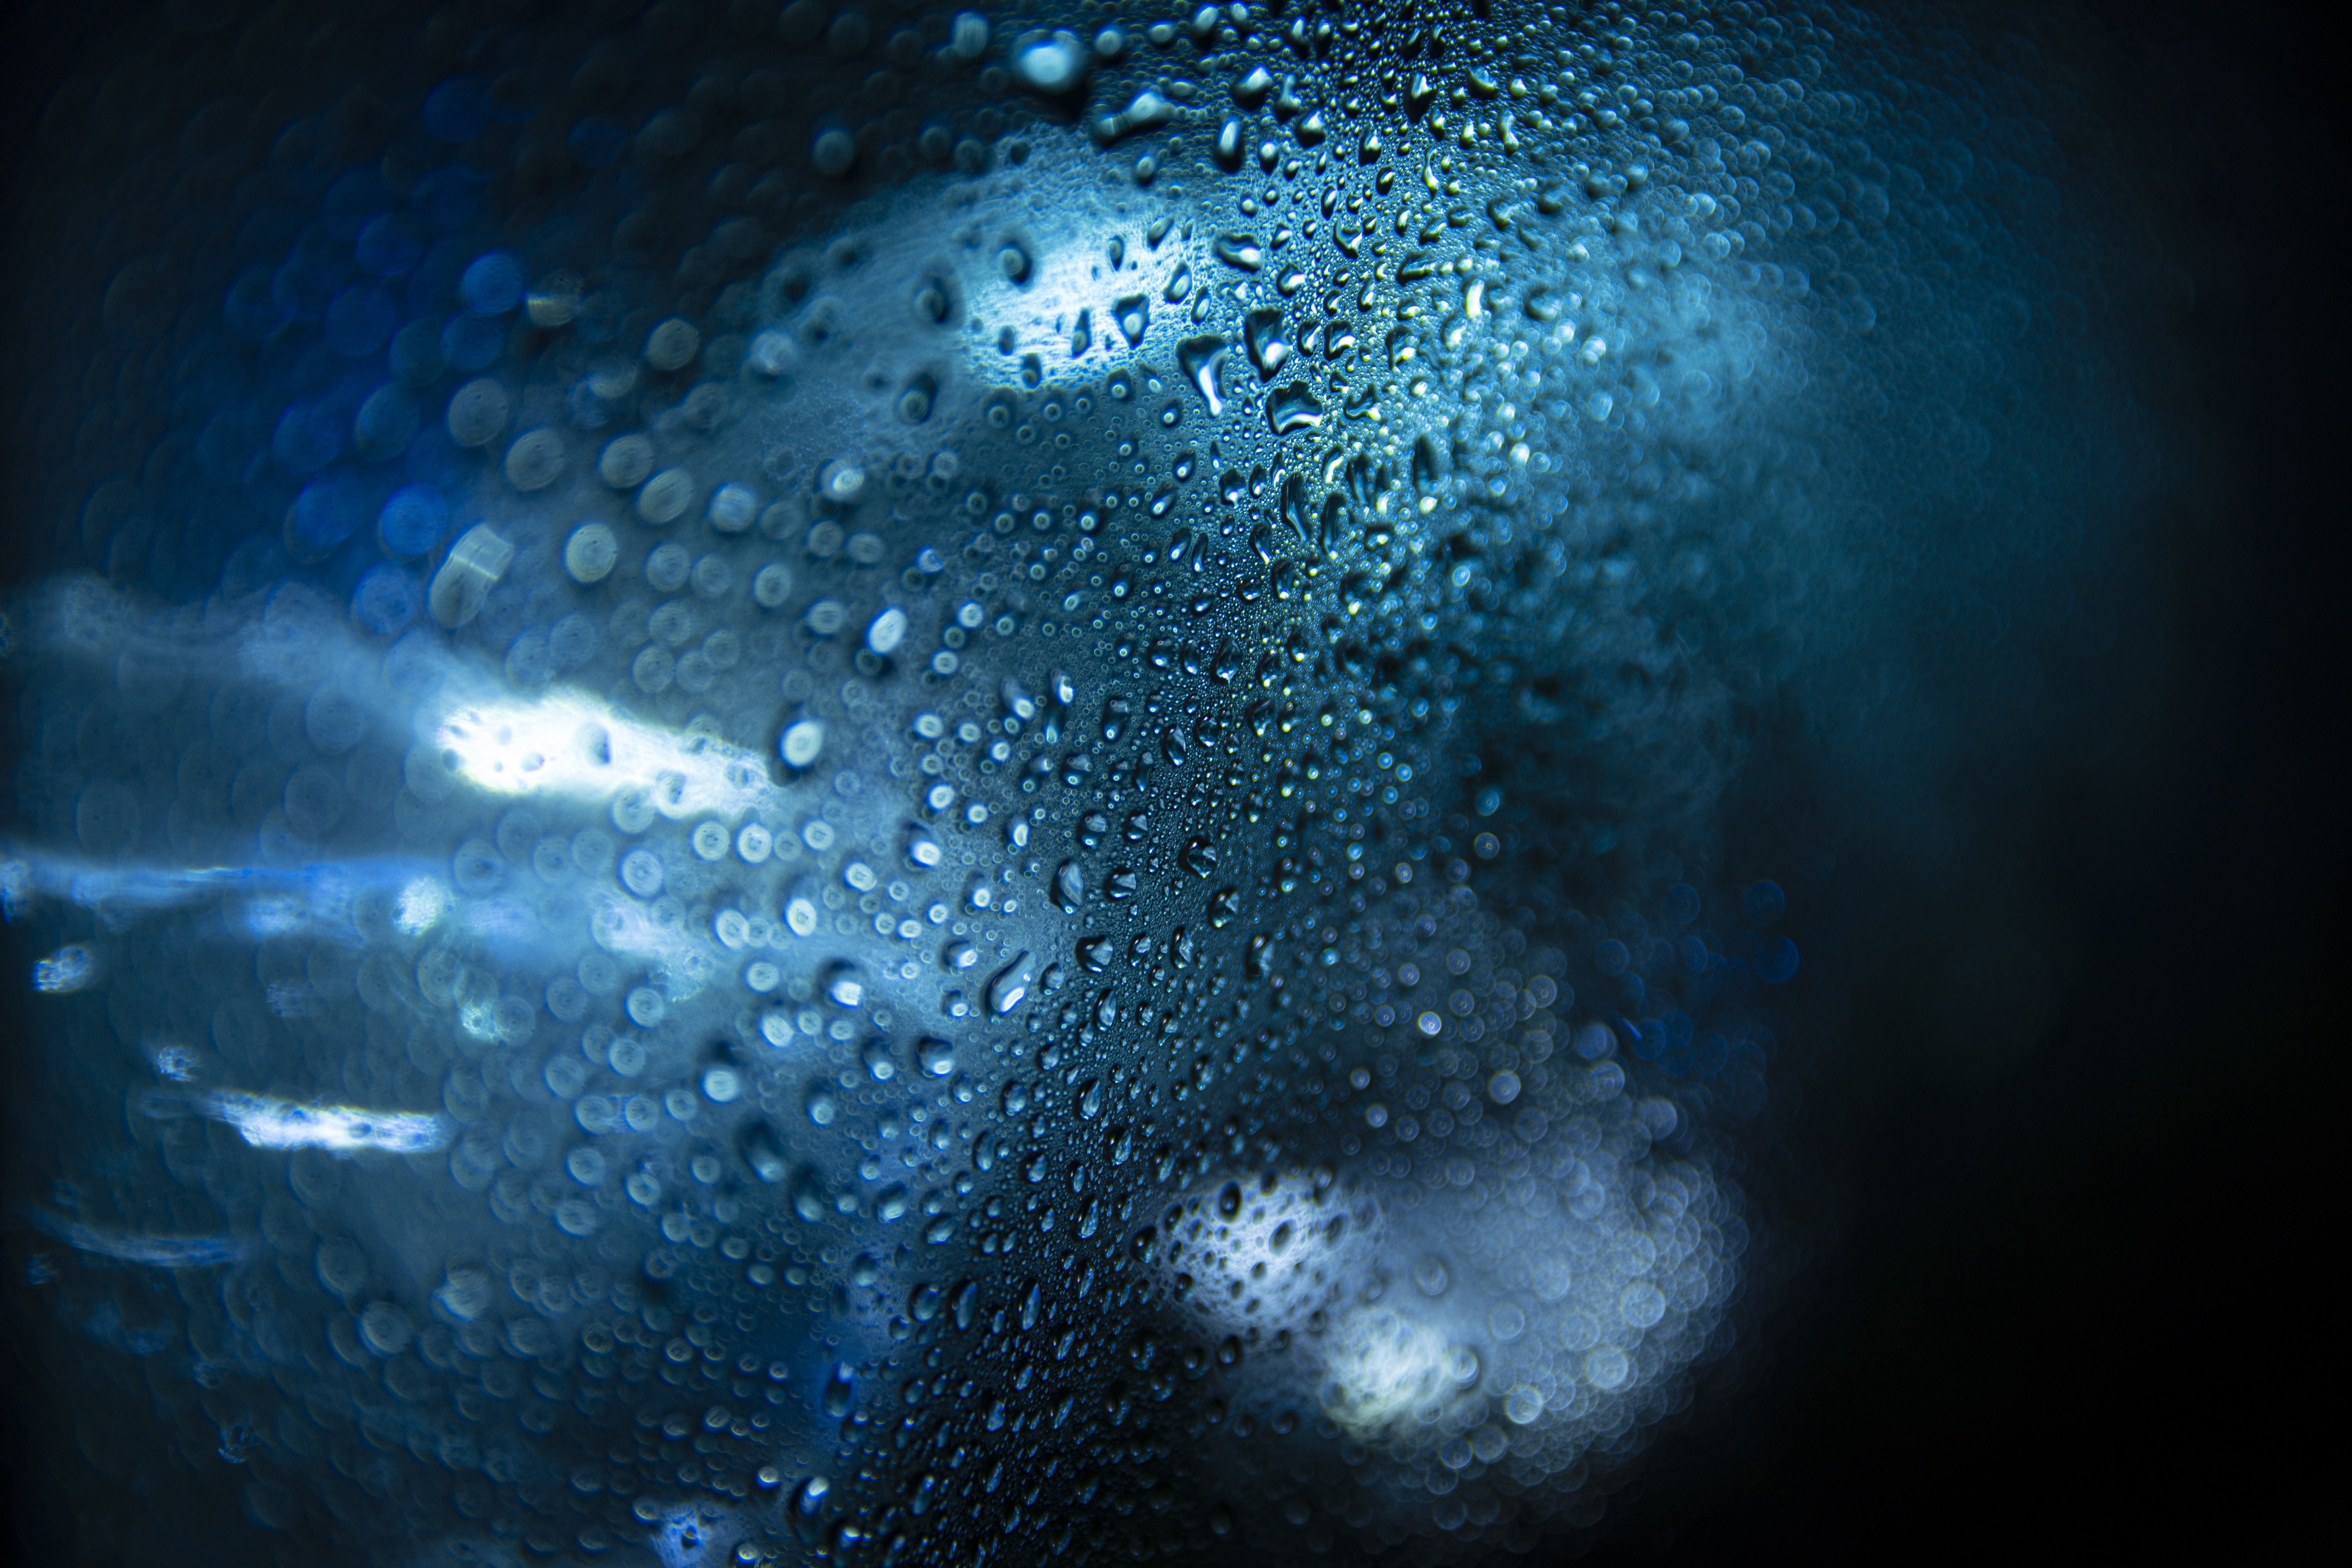 General 6000x4000 water drops water ice glass jar aquarium fish tank water on glass texture Ice crystals glass